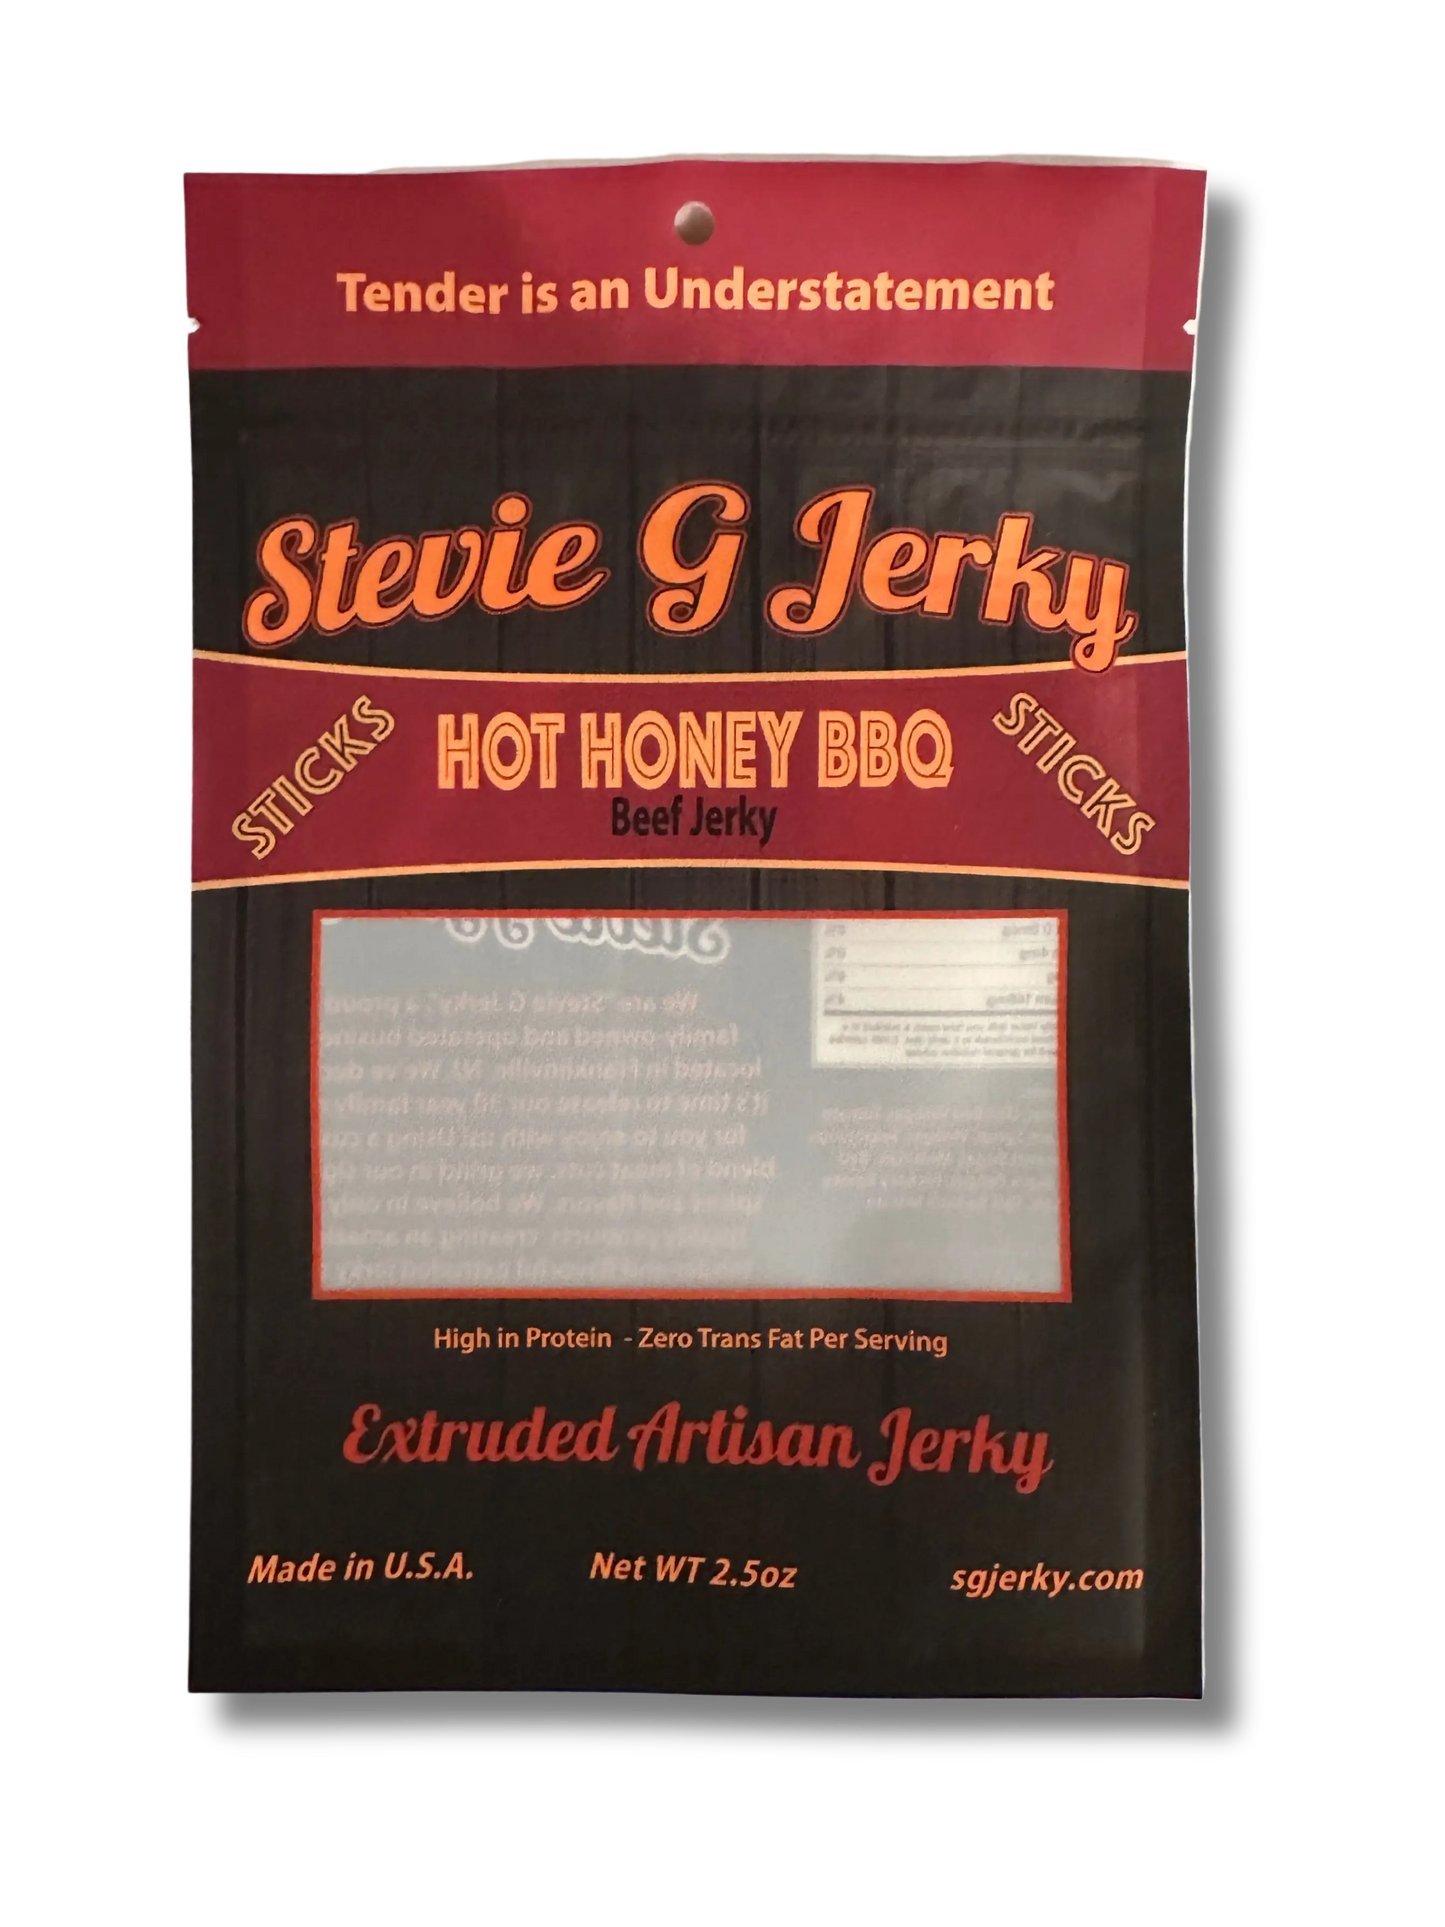 Packaging of Hot-Honey BBQ Beef Jerky Sticks by Stevie G